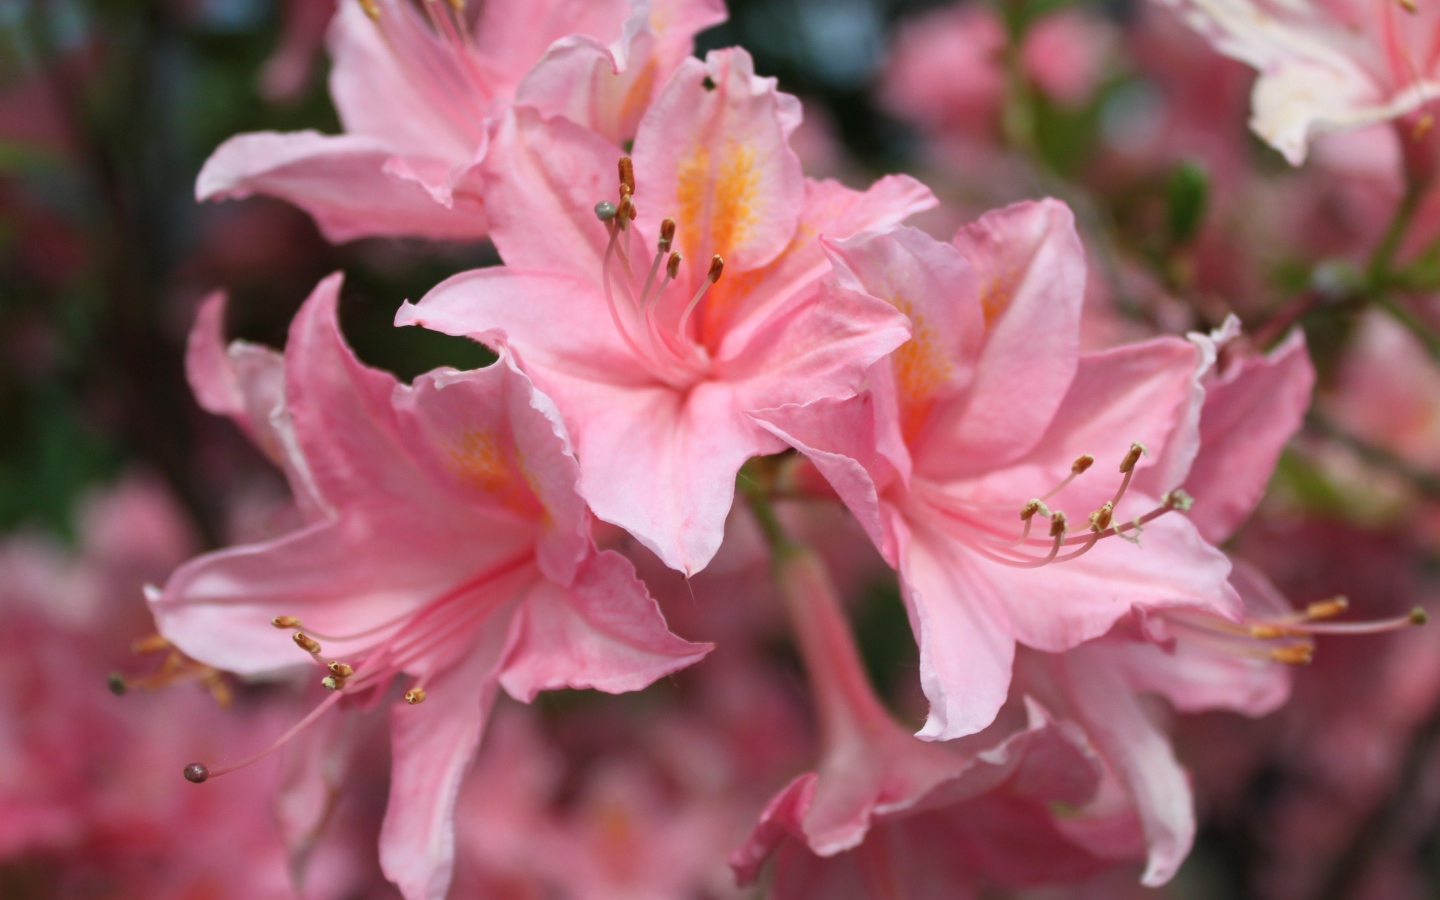 Beautiful pink alstromeria flowers